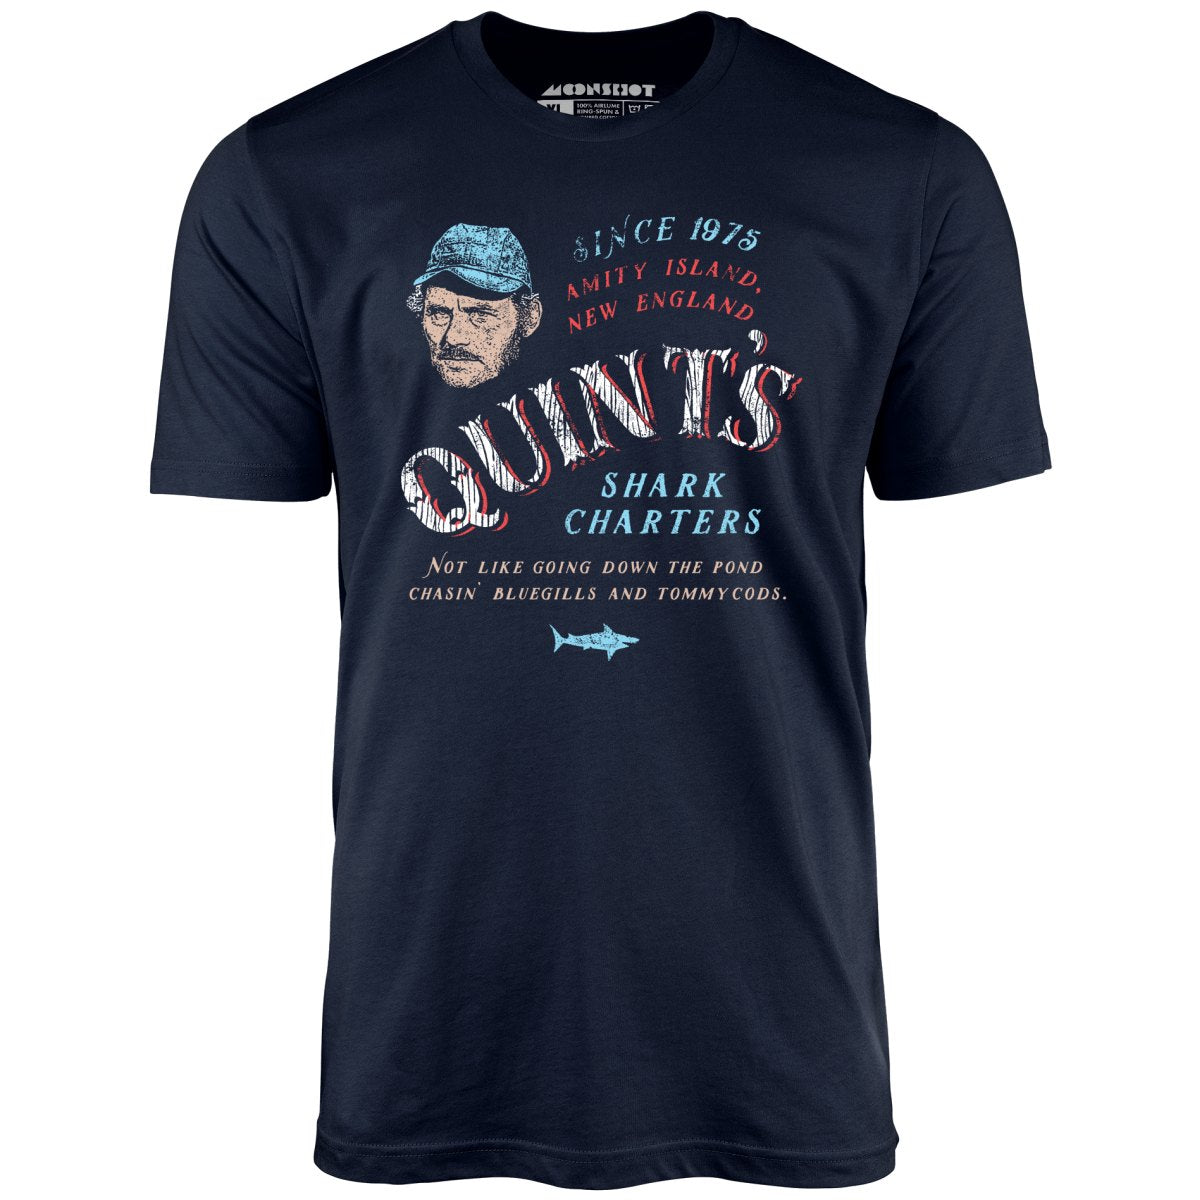 Quints Shark Fishing Jaws Amity Island Classic Design Tshirt Shirt